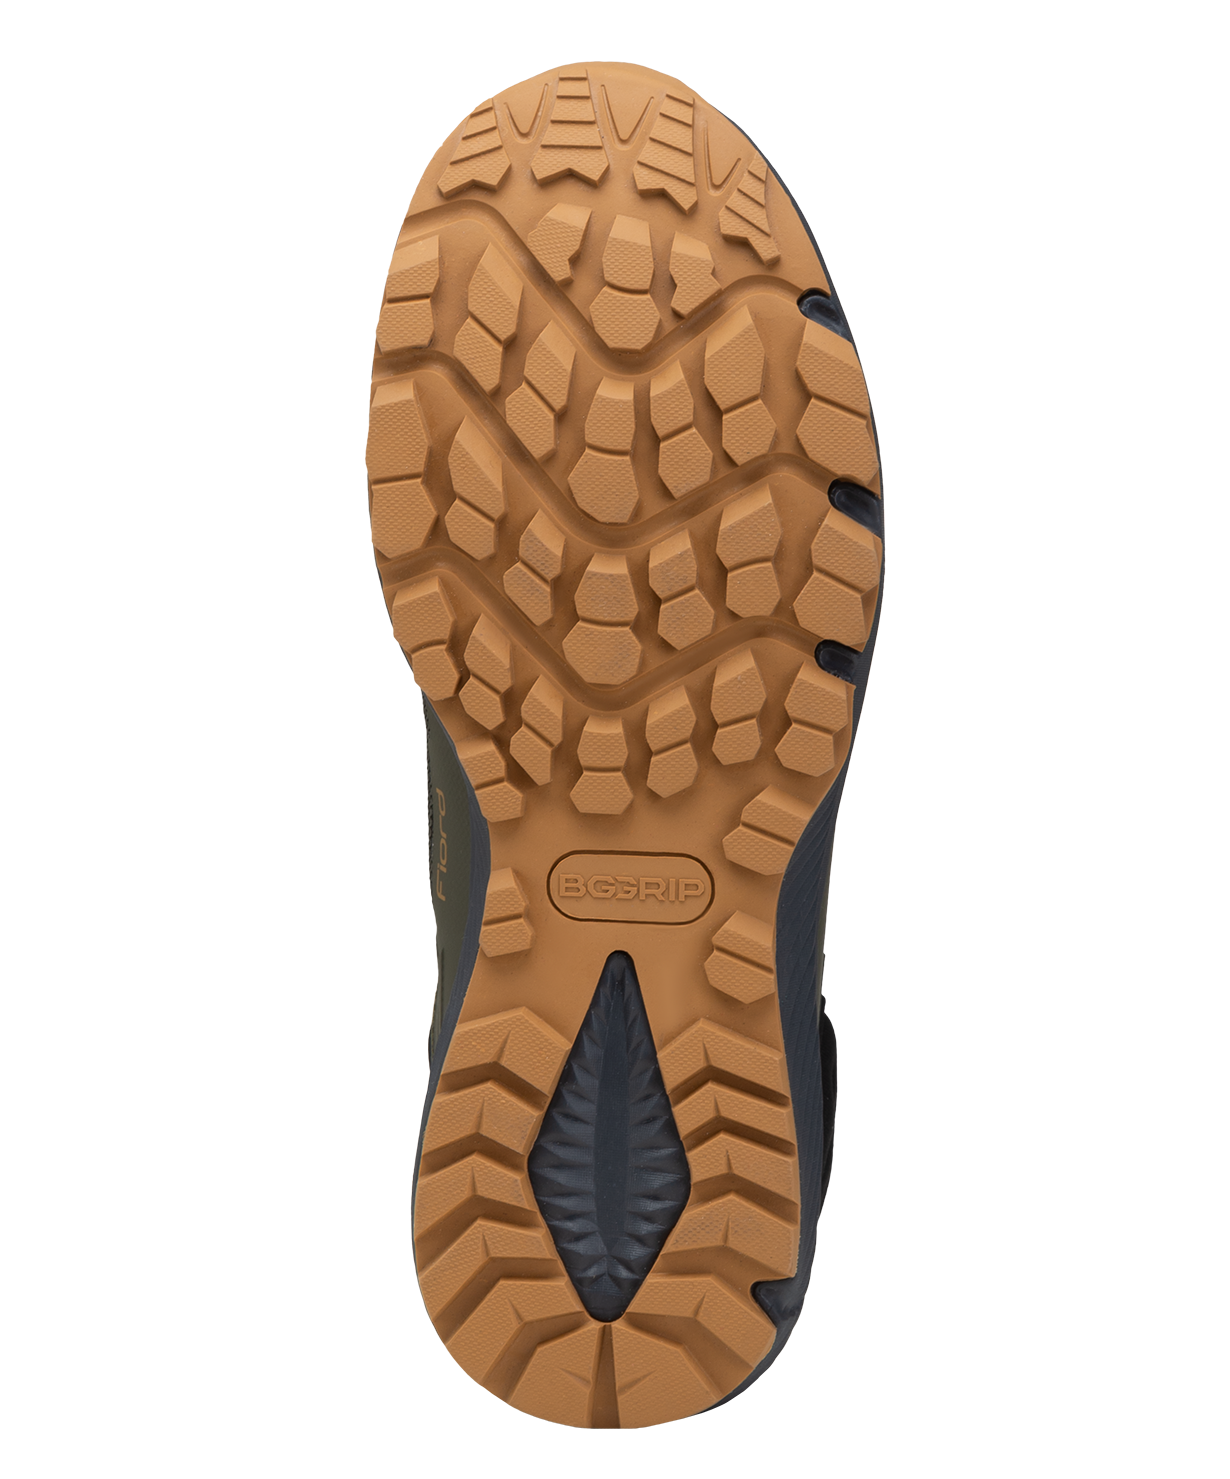 Ботинки Berger Fiord Waterproof, хаки/черный, мужской, р. 39-45 размер 45